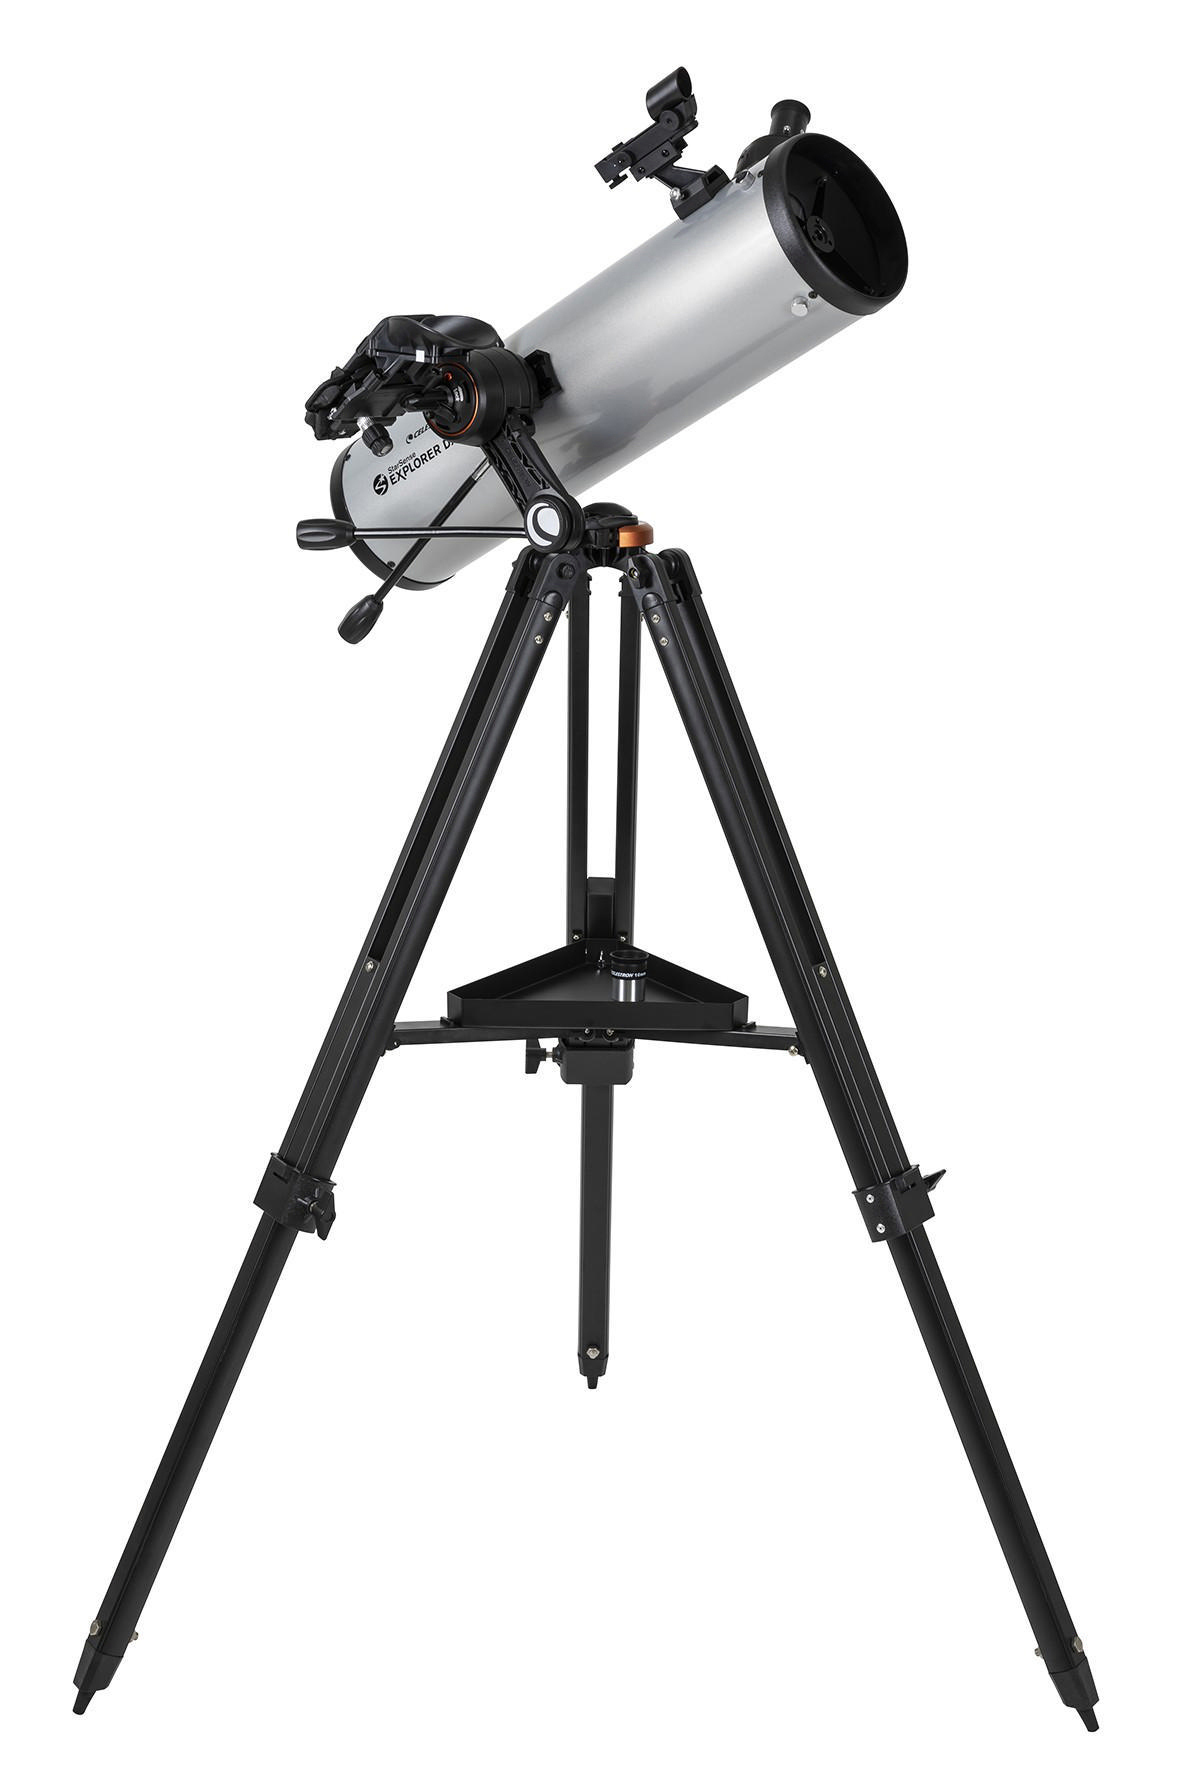 65x, DX CELESTRON 130 mm, AZ Starsense 26x, Teleskop 130